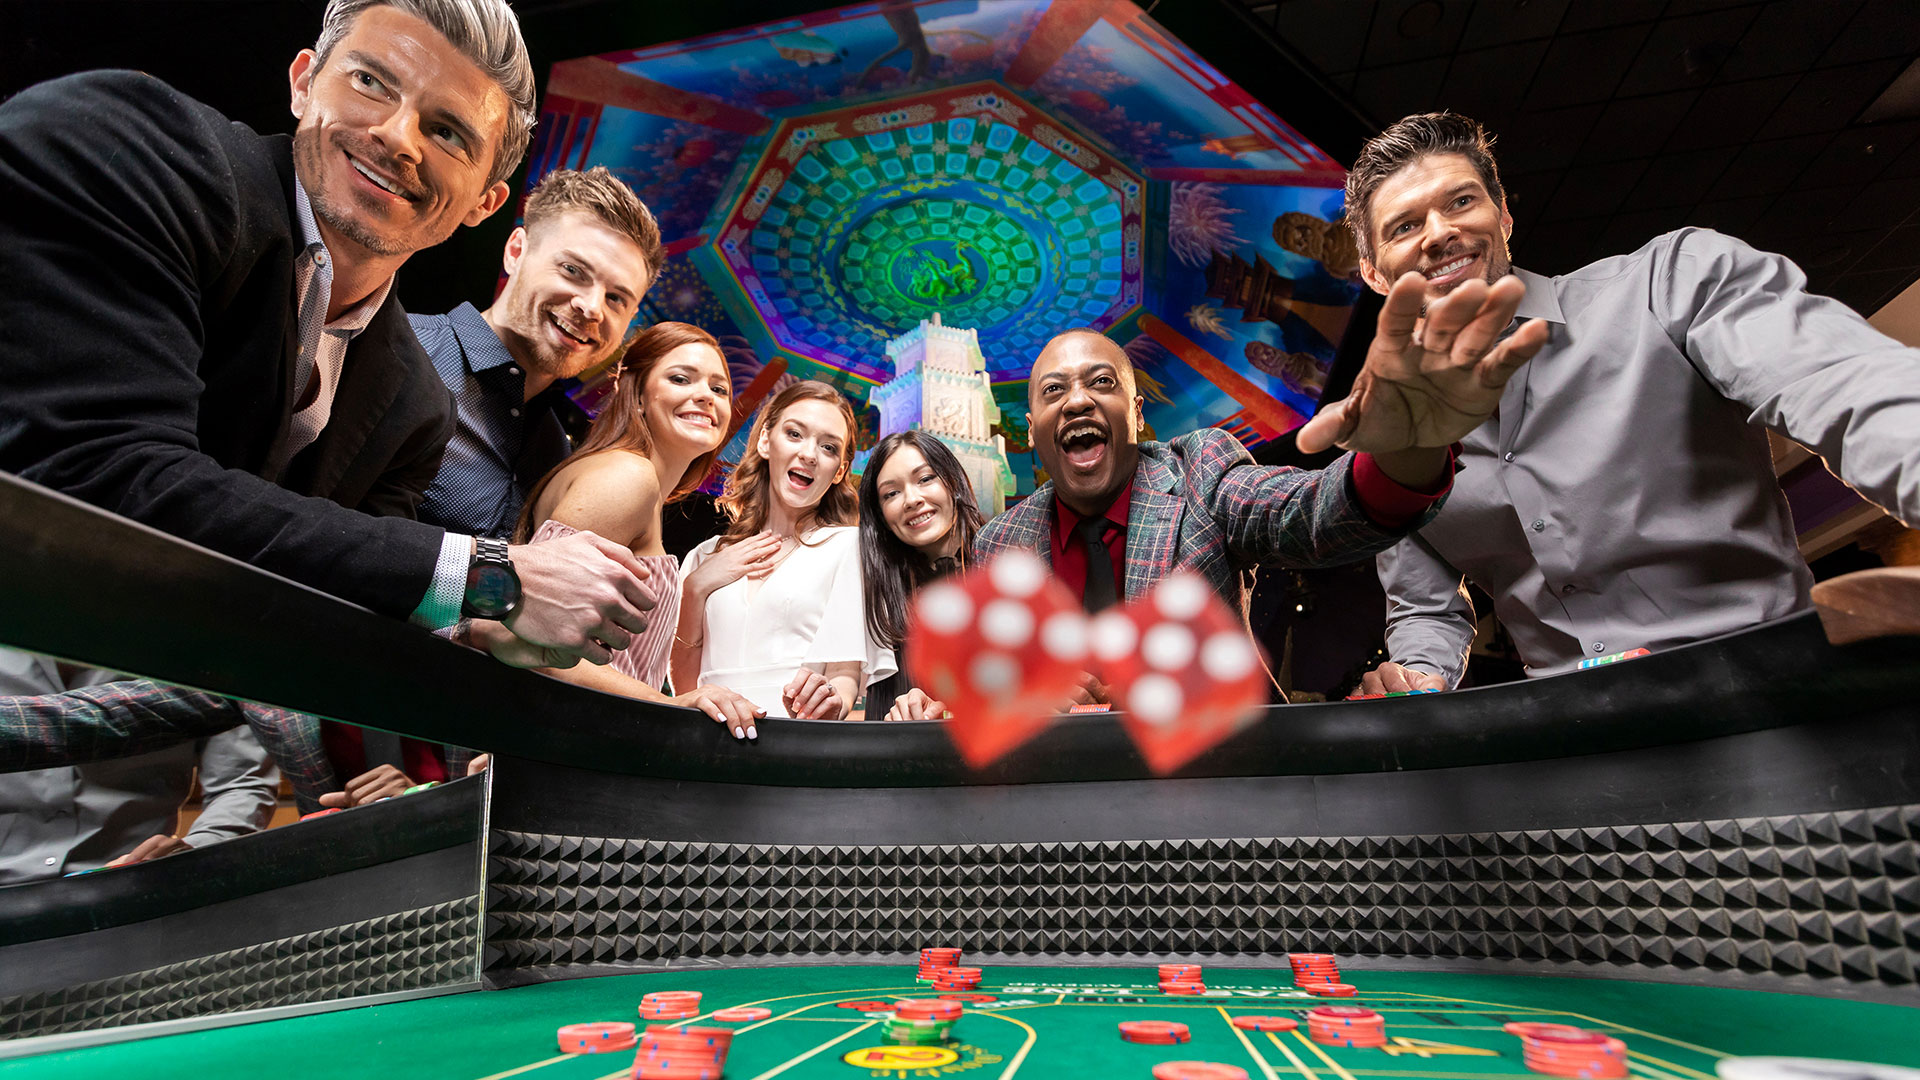 Online casino(คาสิโนออนไลน์) of Finland the new bet of games.